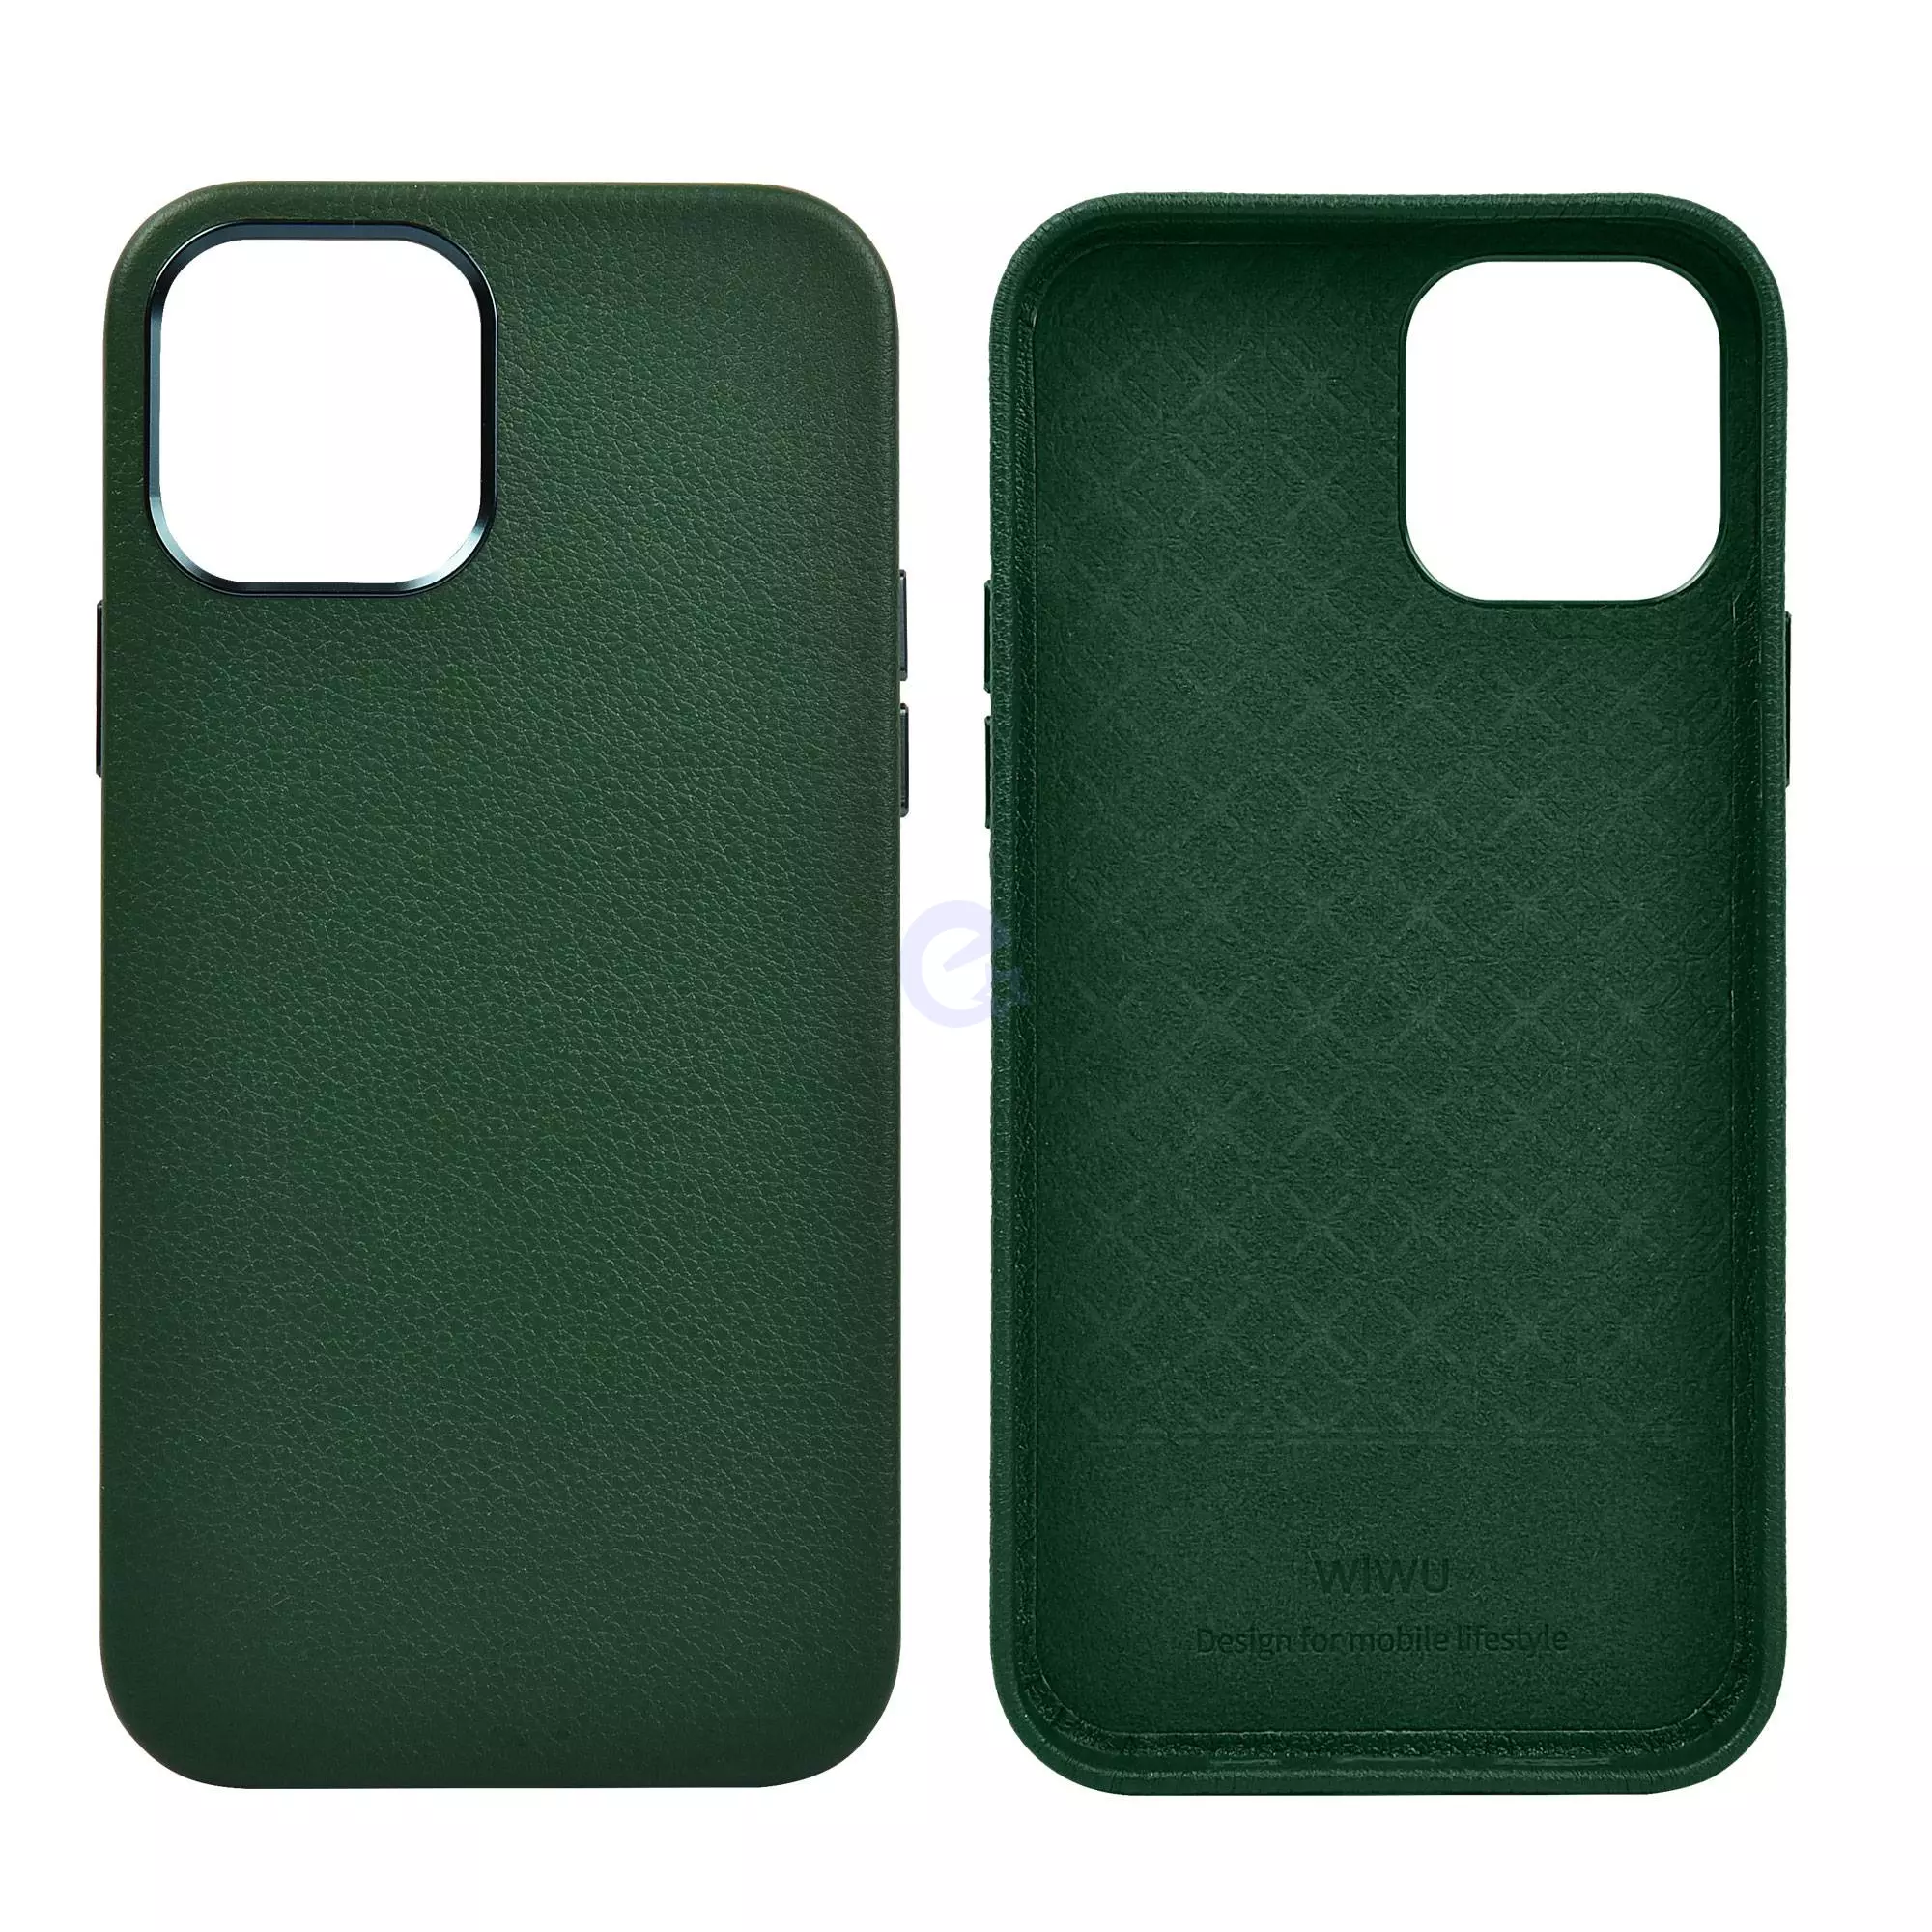 Чехол бампер для iPhone 13 Pro Max WiWU Calfskin Leather Case Brown (Коричневый)